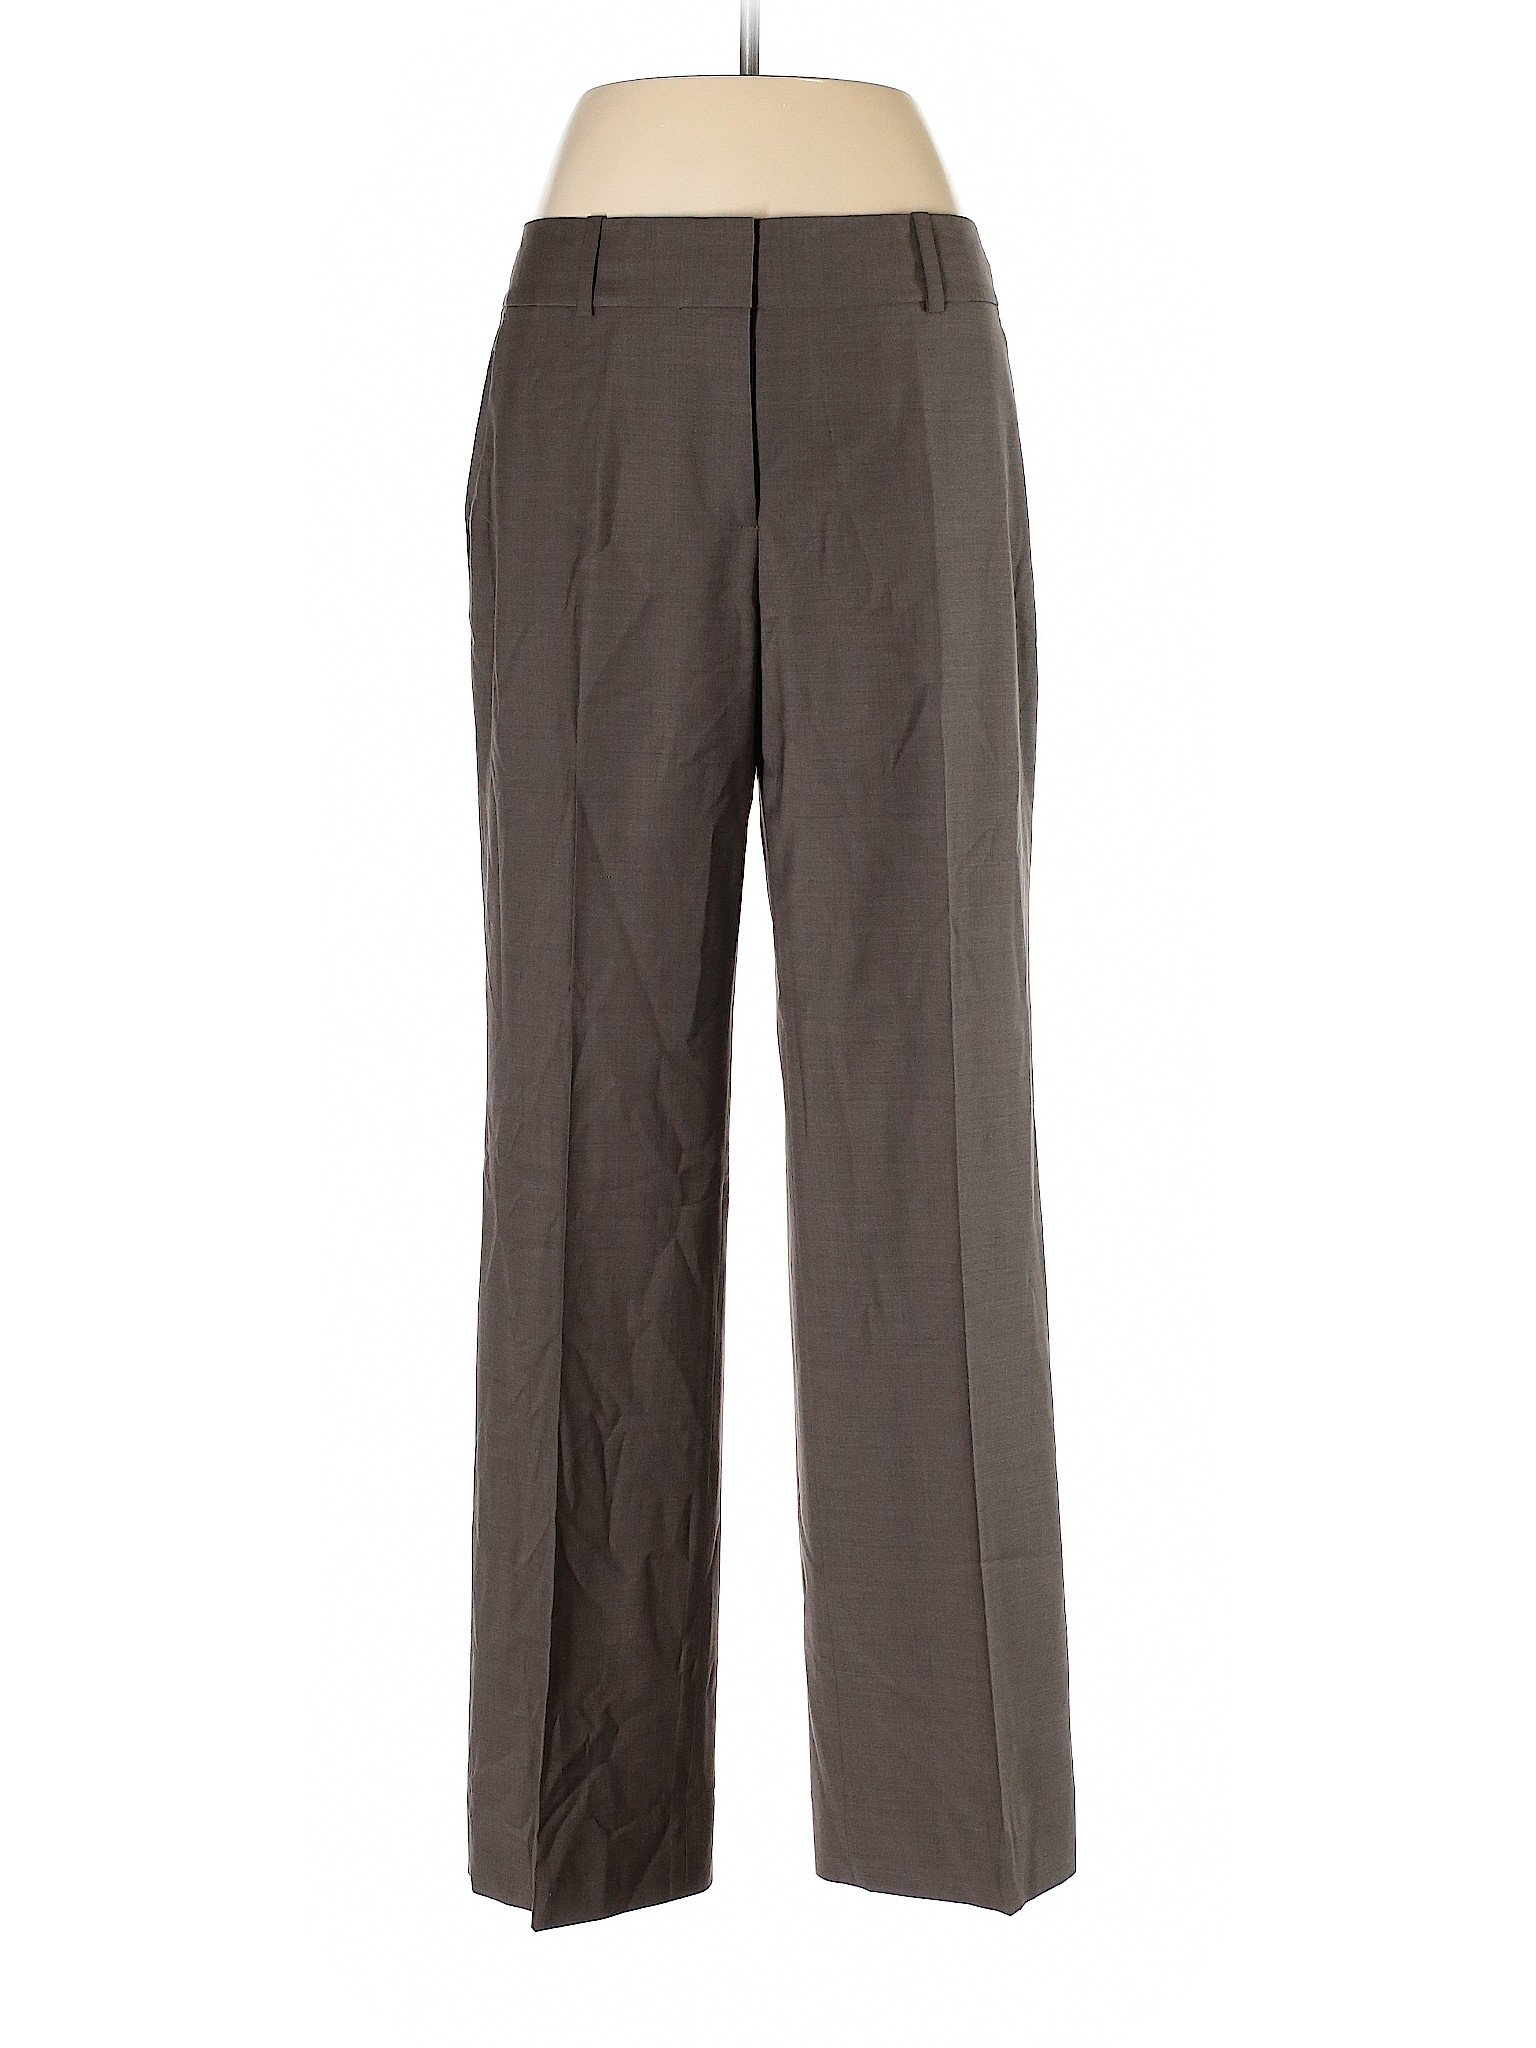 Ann Taylor Women Gray Wool Pants 6 | eBay